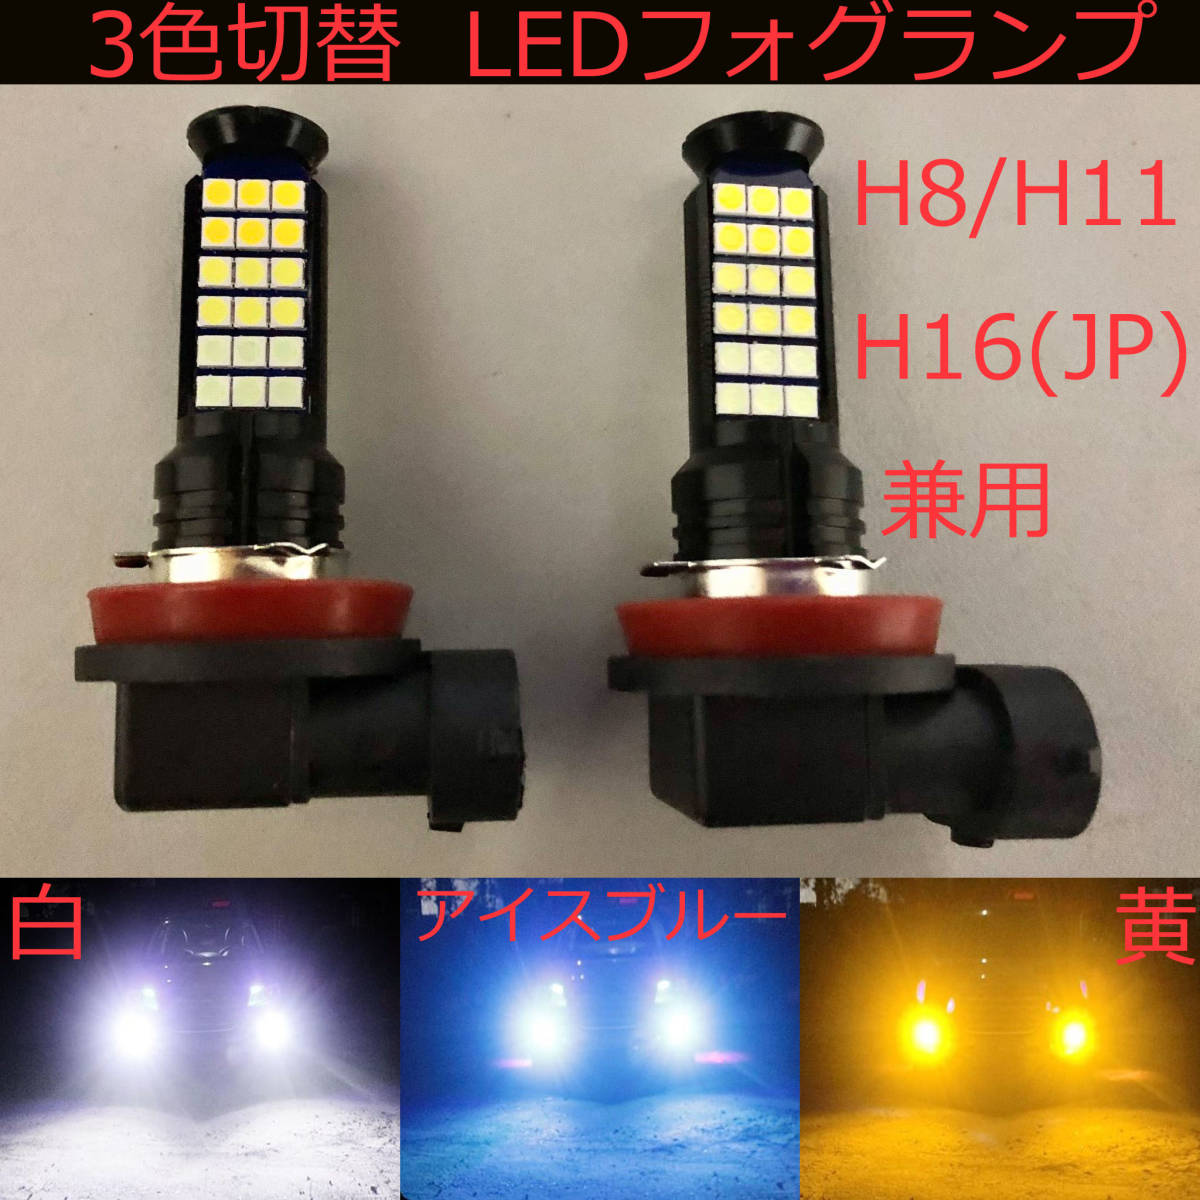 LEDフォグランプ 2個セット H8/H11/H16(国産車)兼用 ホワイト/イエロー/アイスブルー3色切替 トライカラー ledフォグライトの画像1